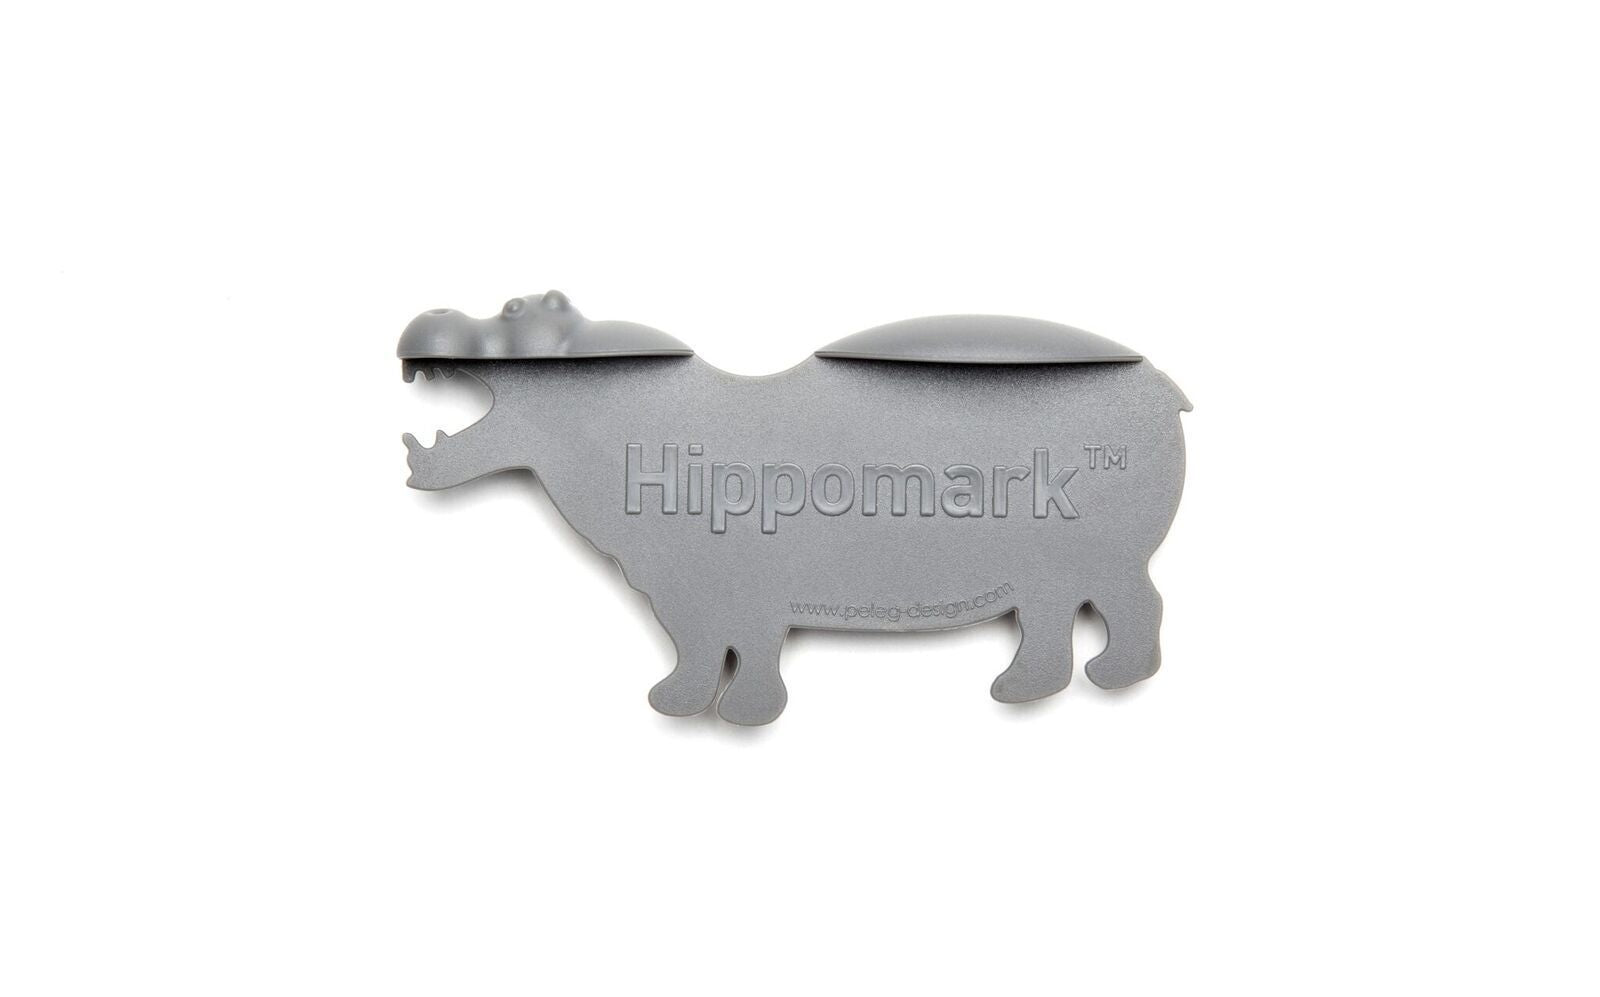 Hippomark-Lesezeichen-by-PELEG-Design-berlindeluxe-hippopotermus